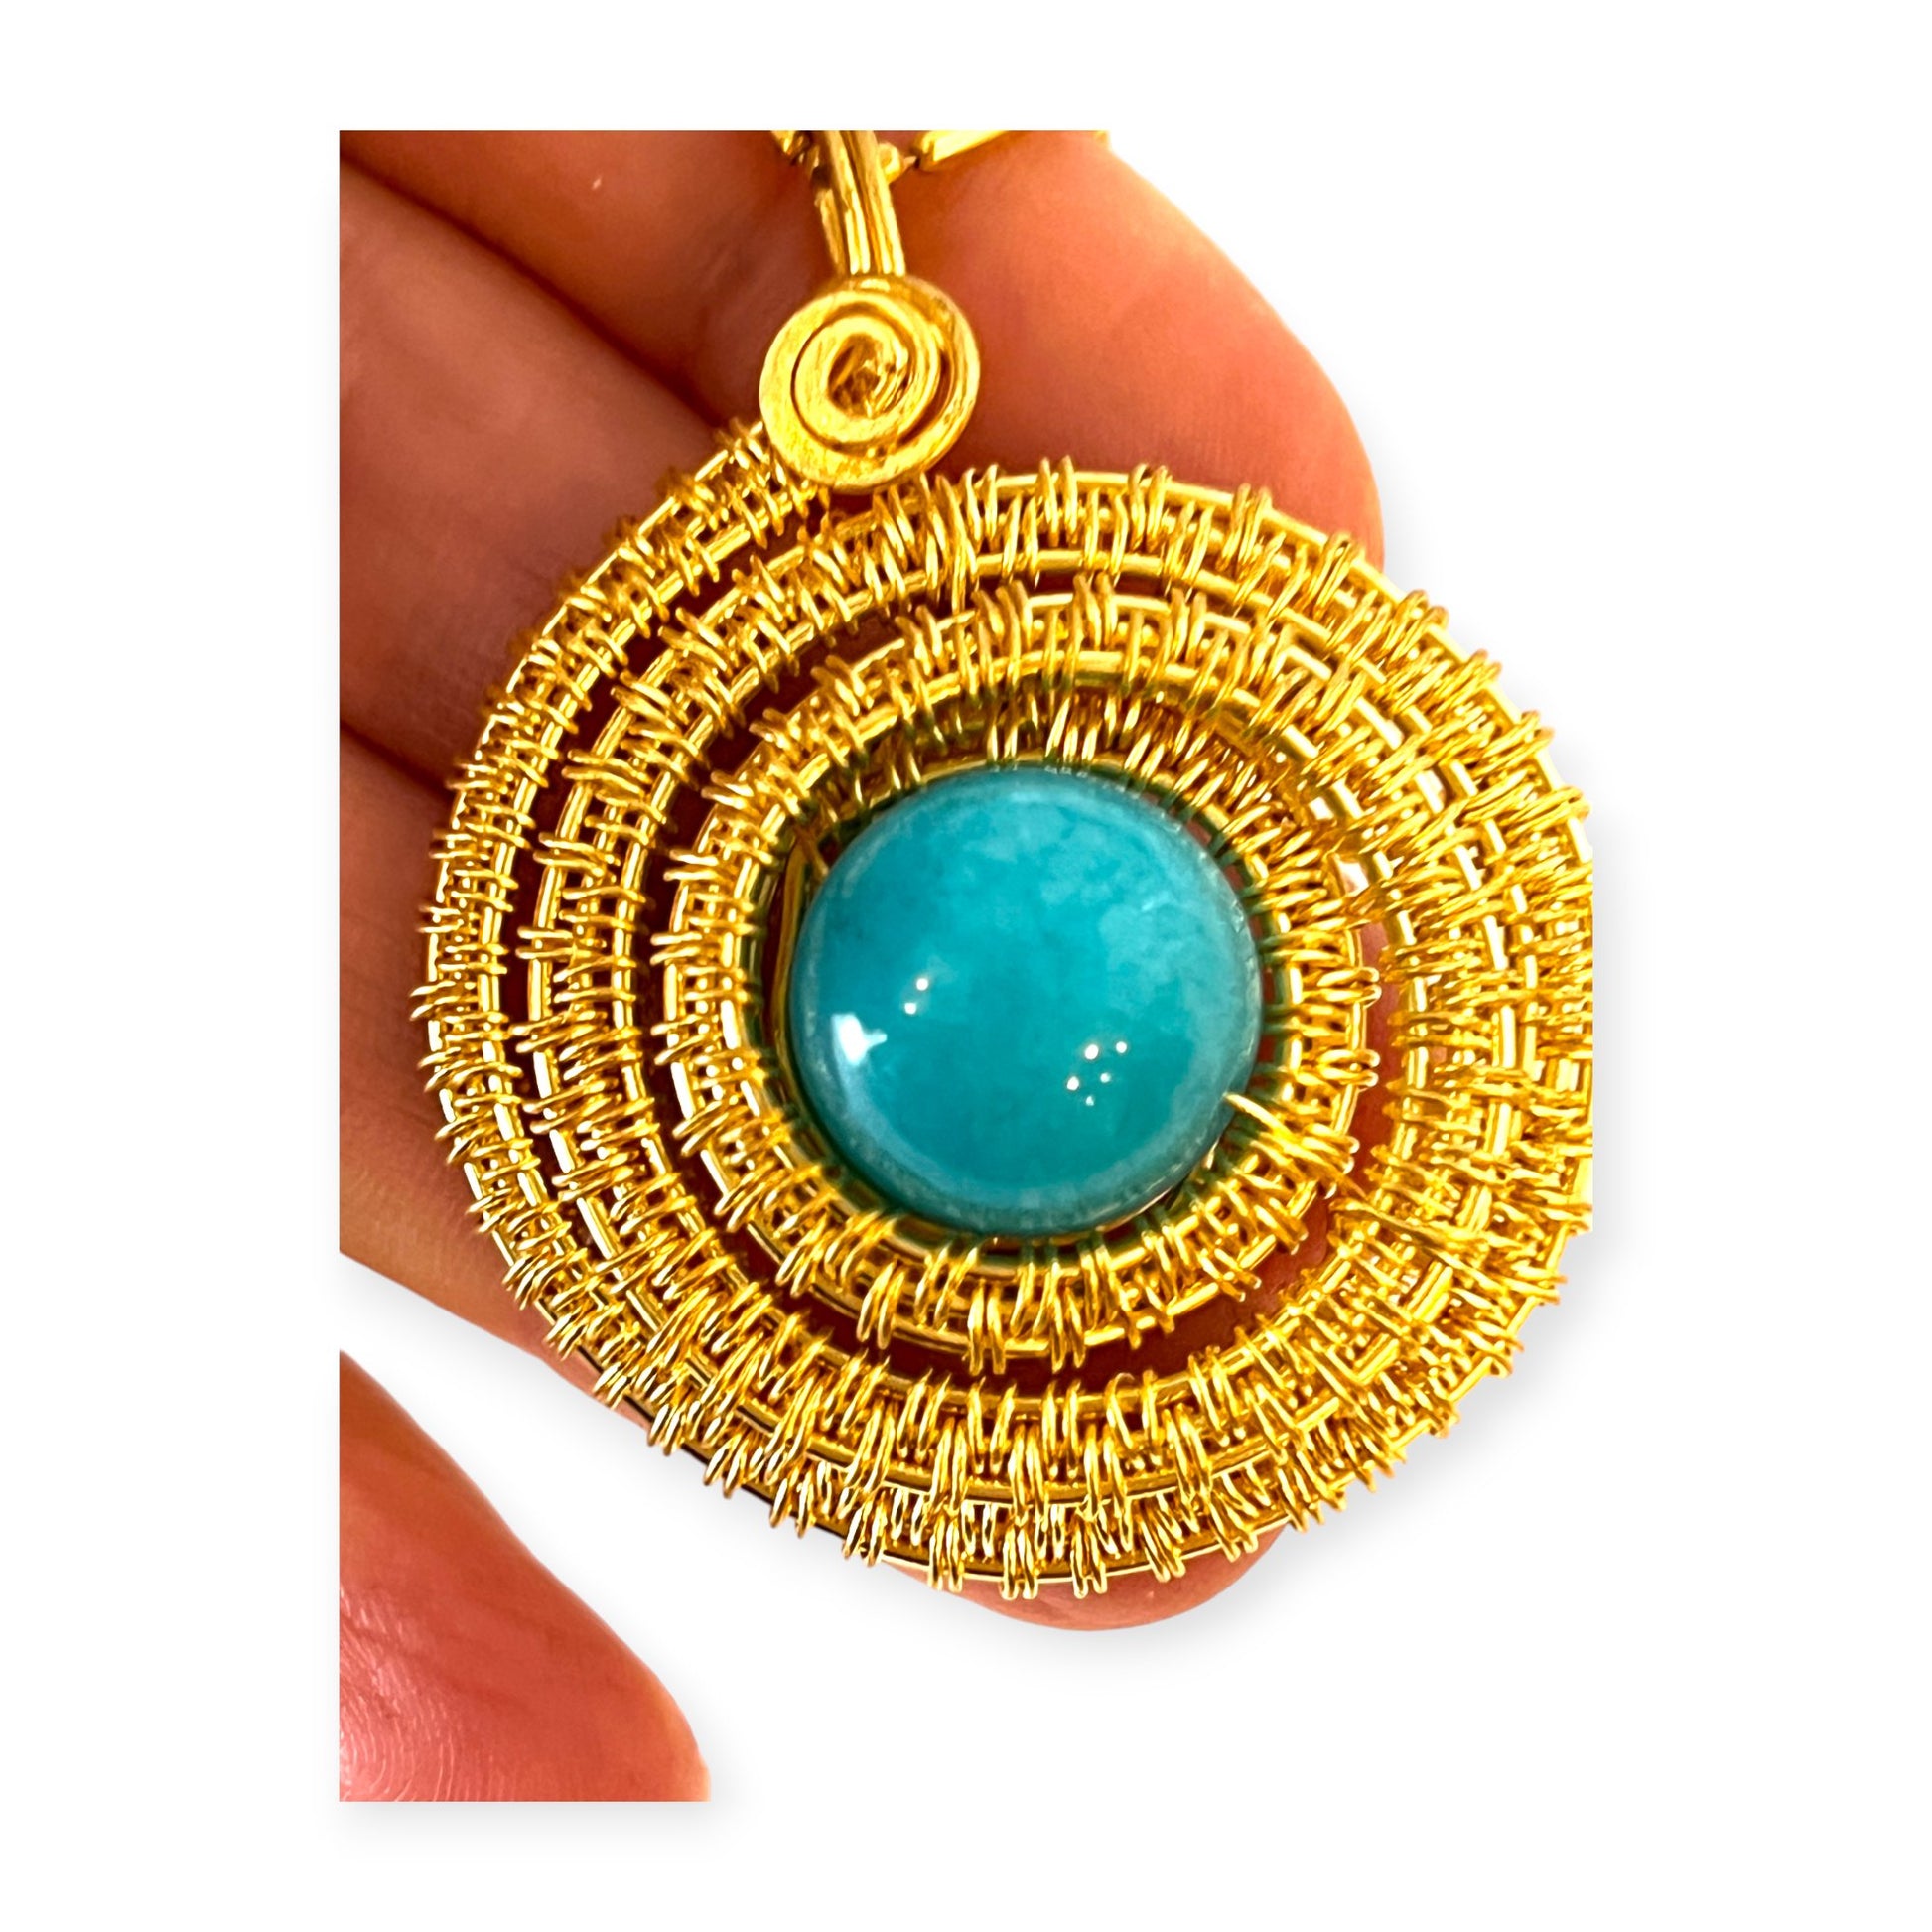 Spiral pendant with bright colored stone - Sundara Joon